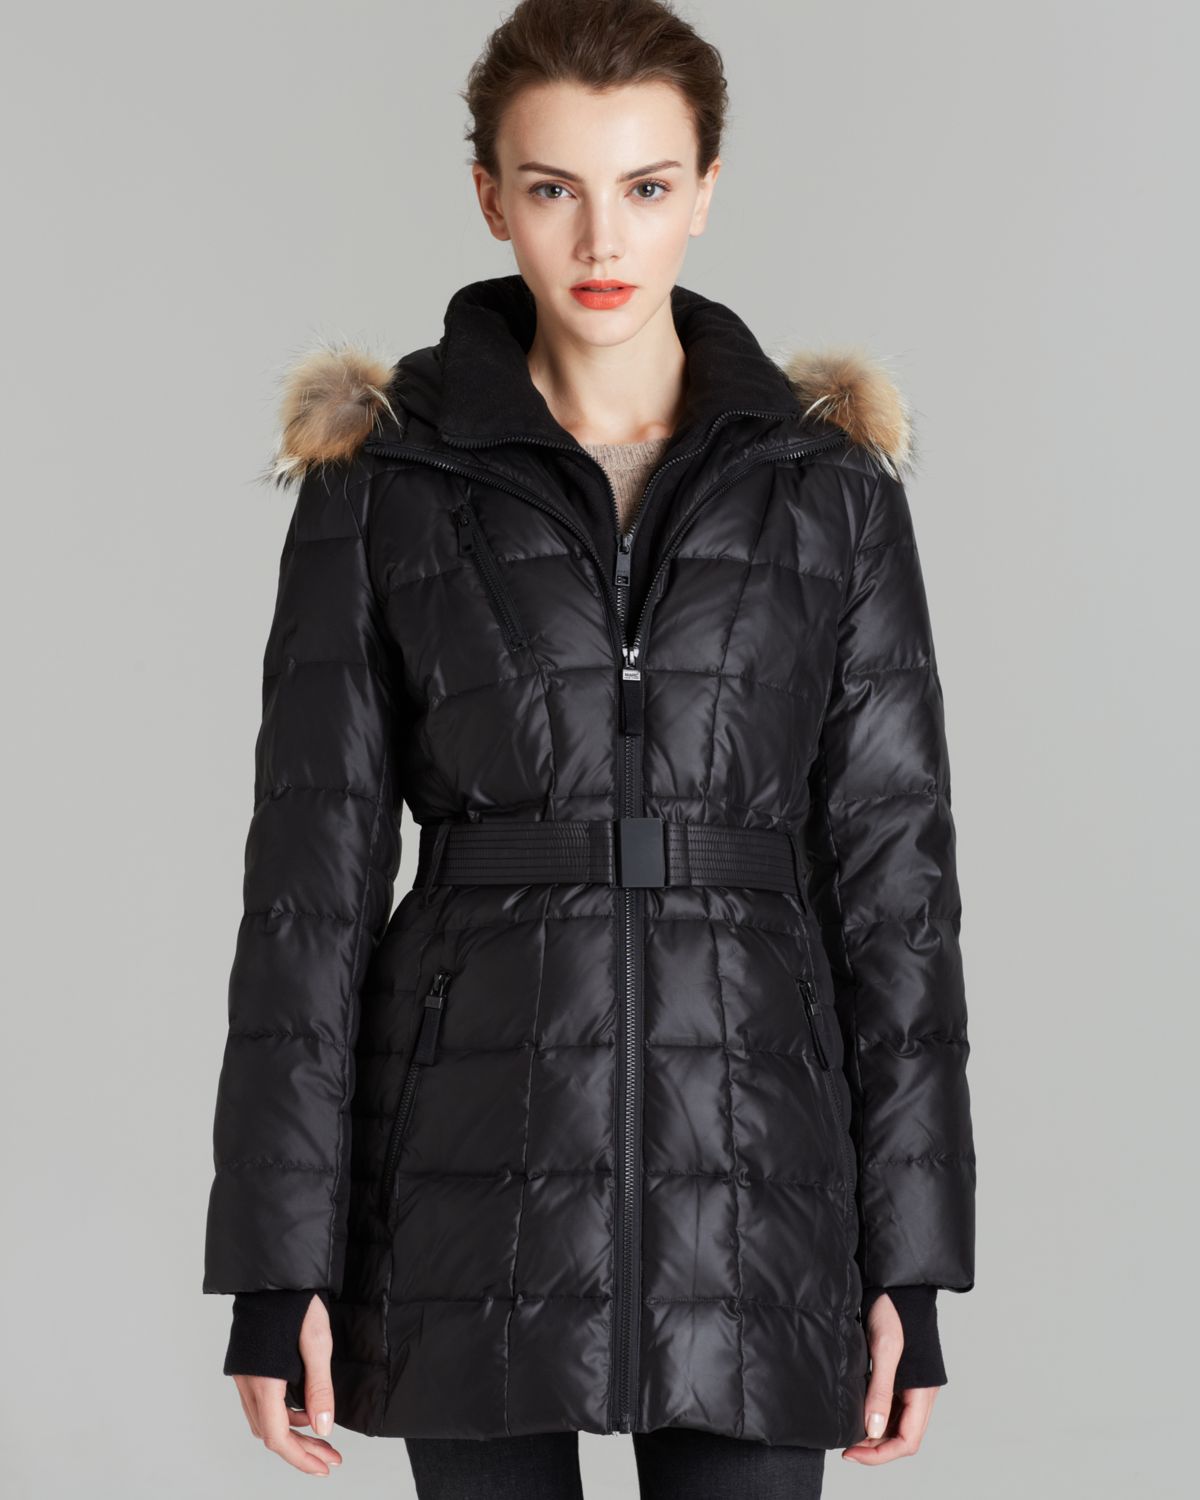 Lyst - Marc New York Down Coat Fur Trim Puffer in Black